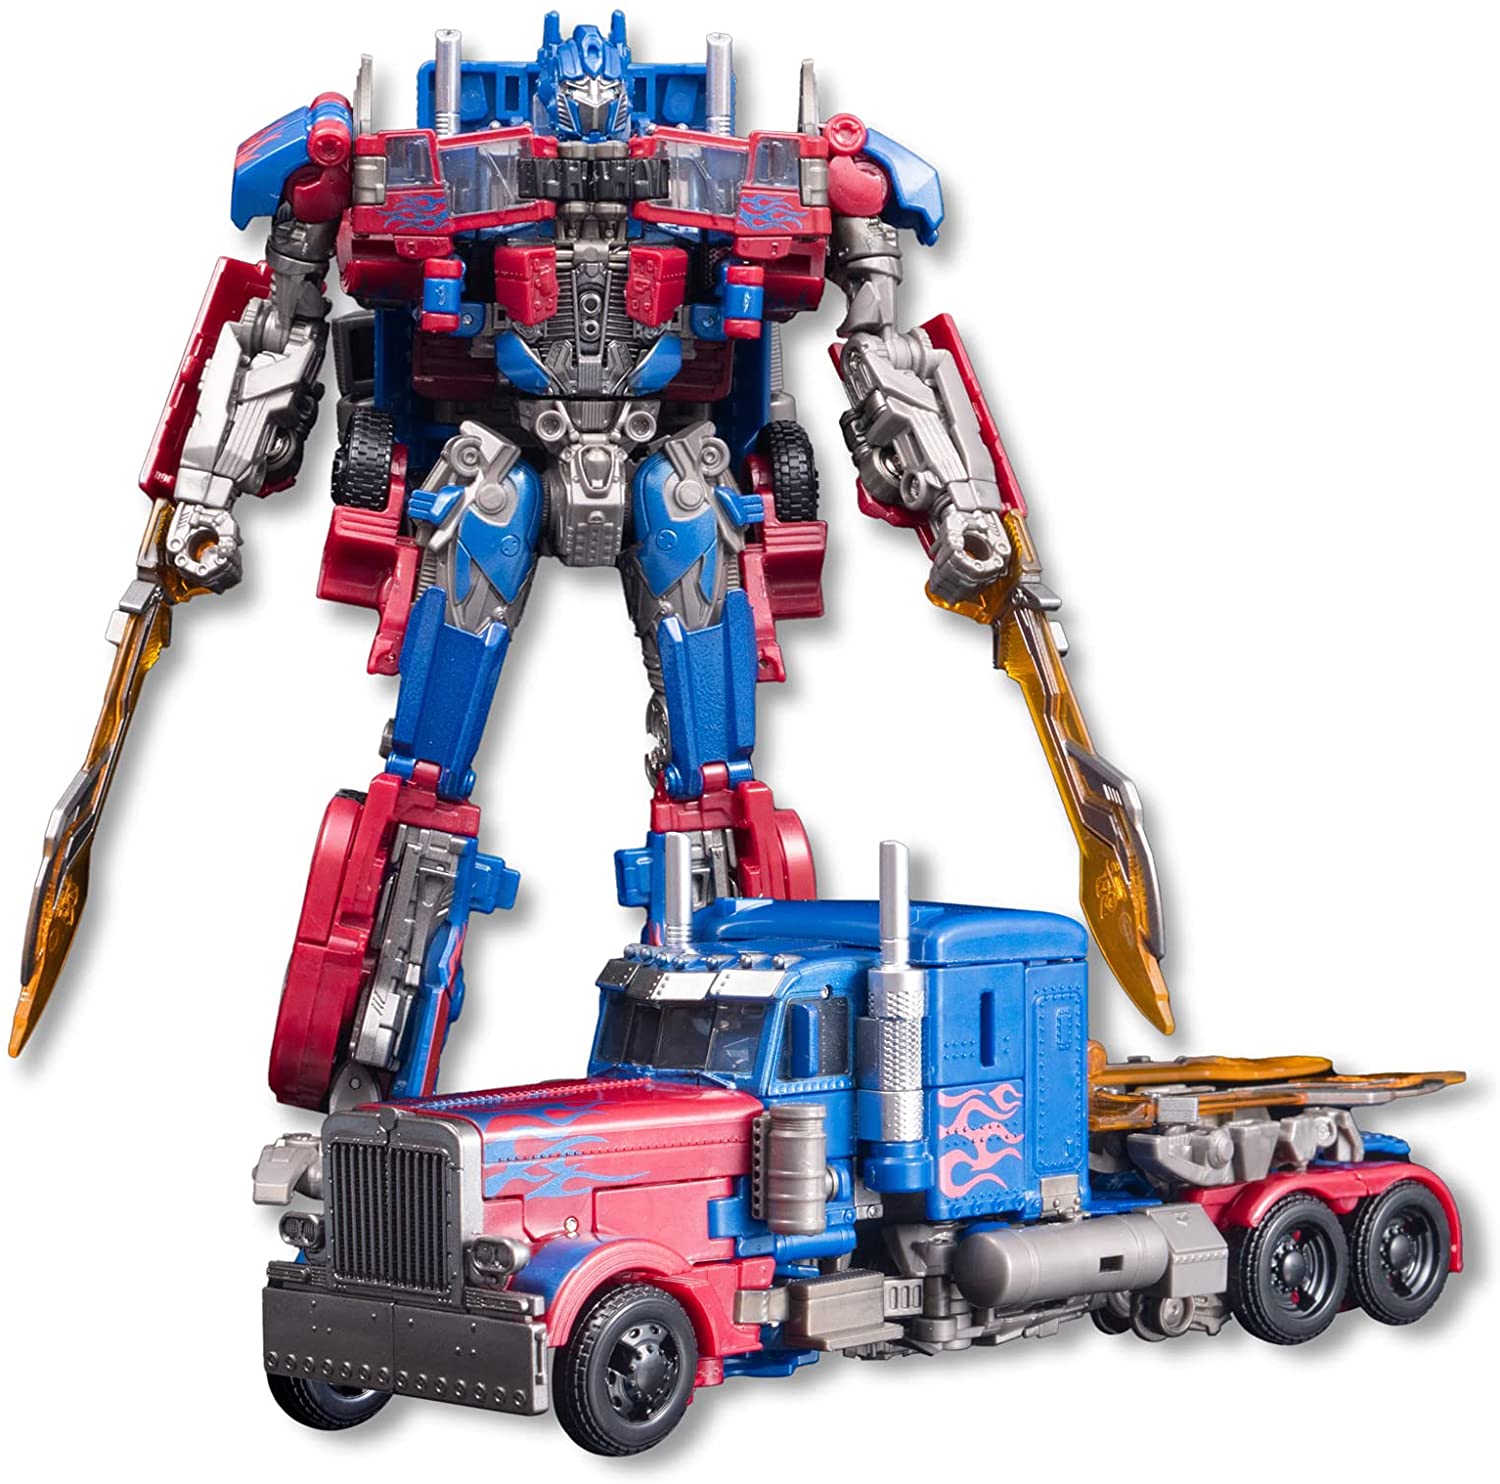 Transformers 1 Autobots Toys